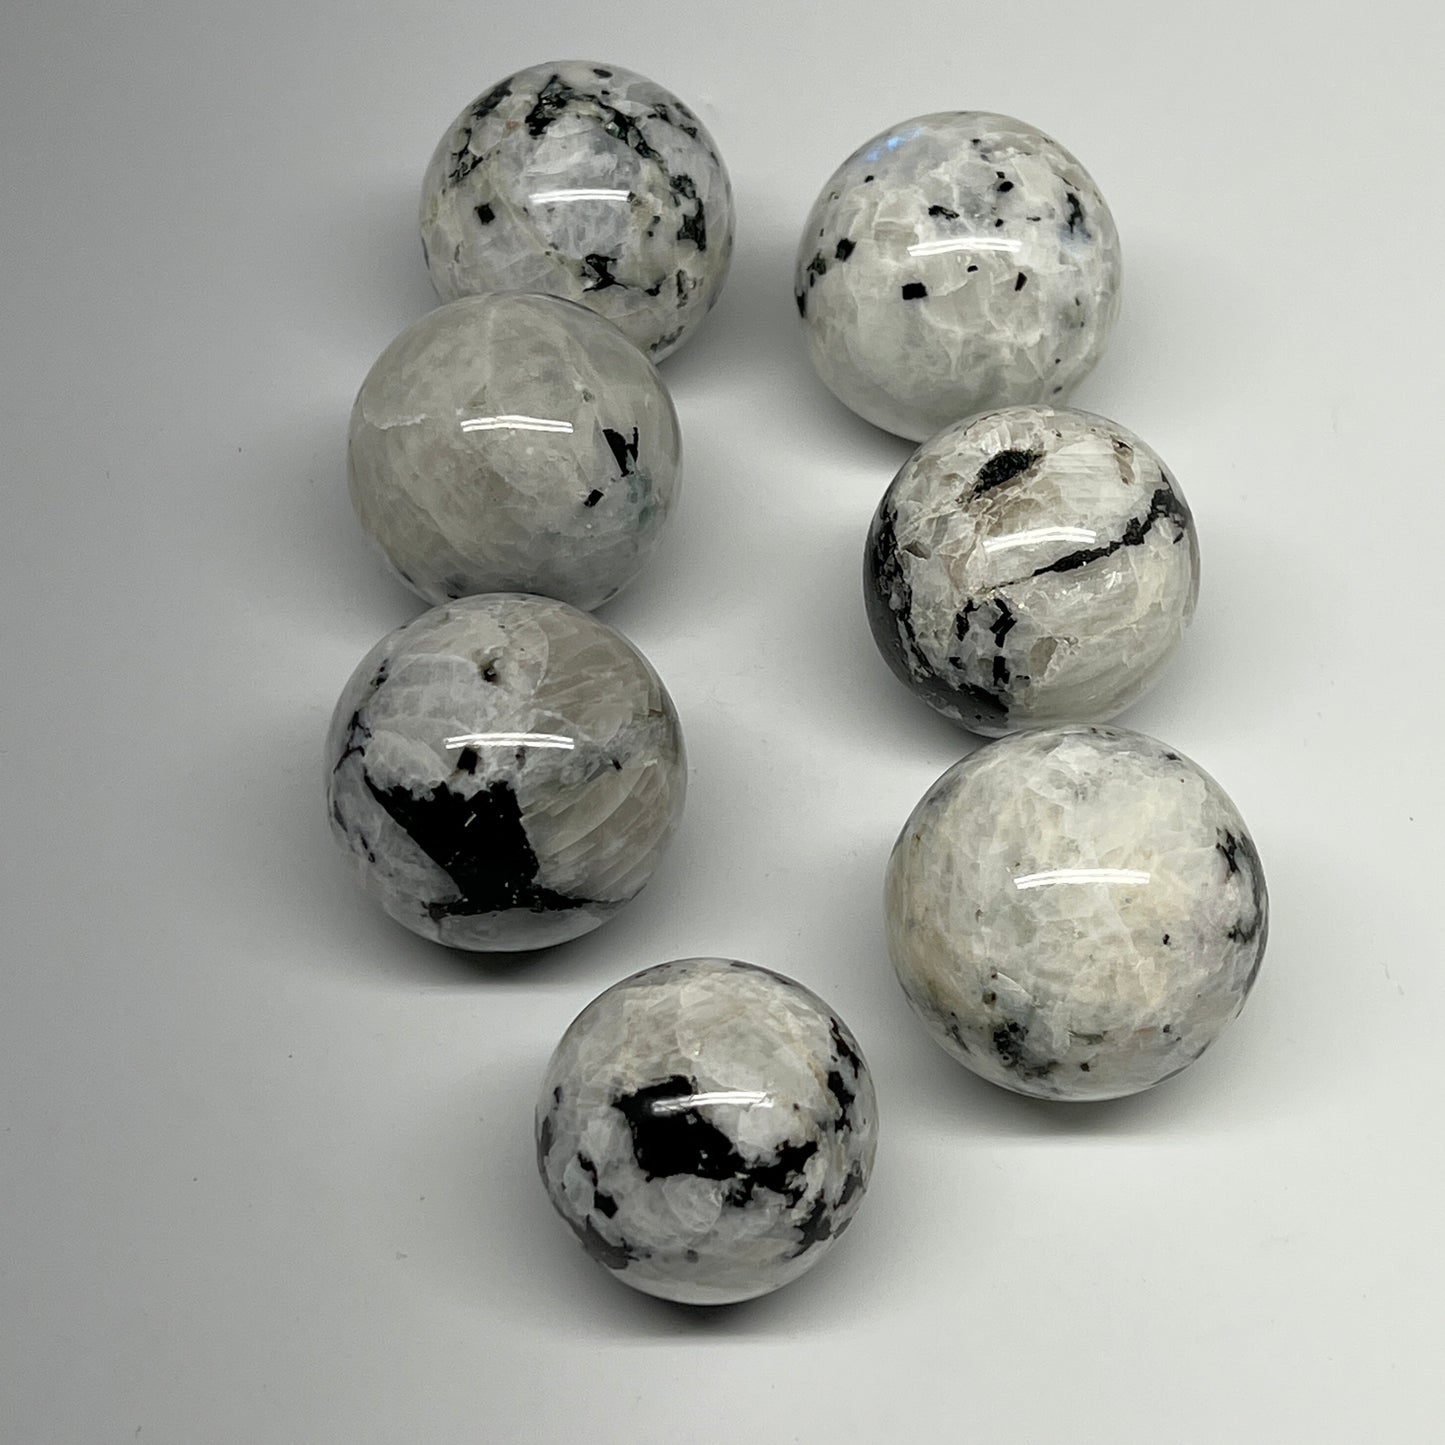 1035g, 1.6" - 2", 7pcs, Rainbow Moonstone Spheres Gemstones @India, B21430